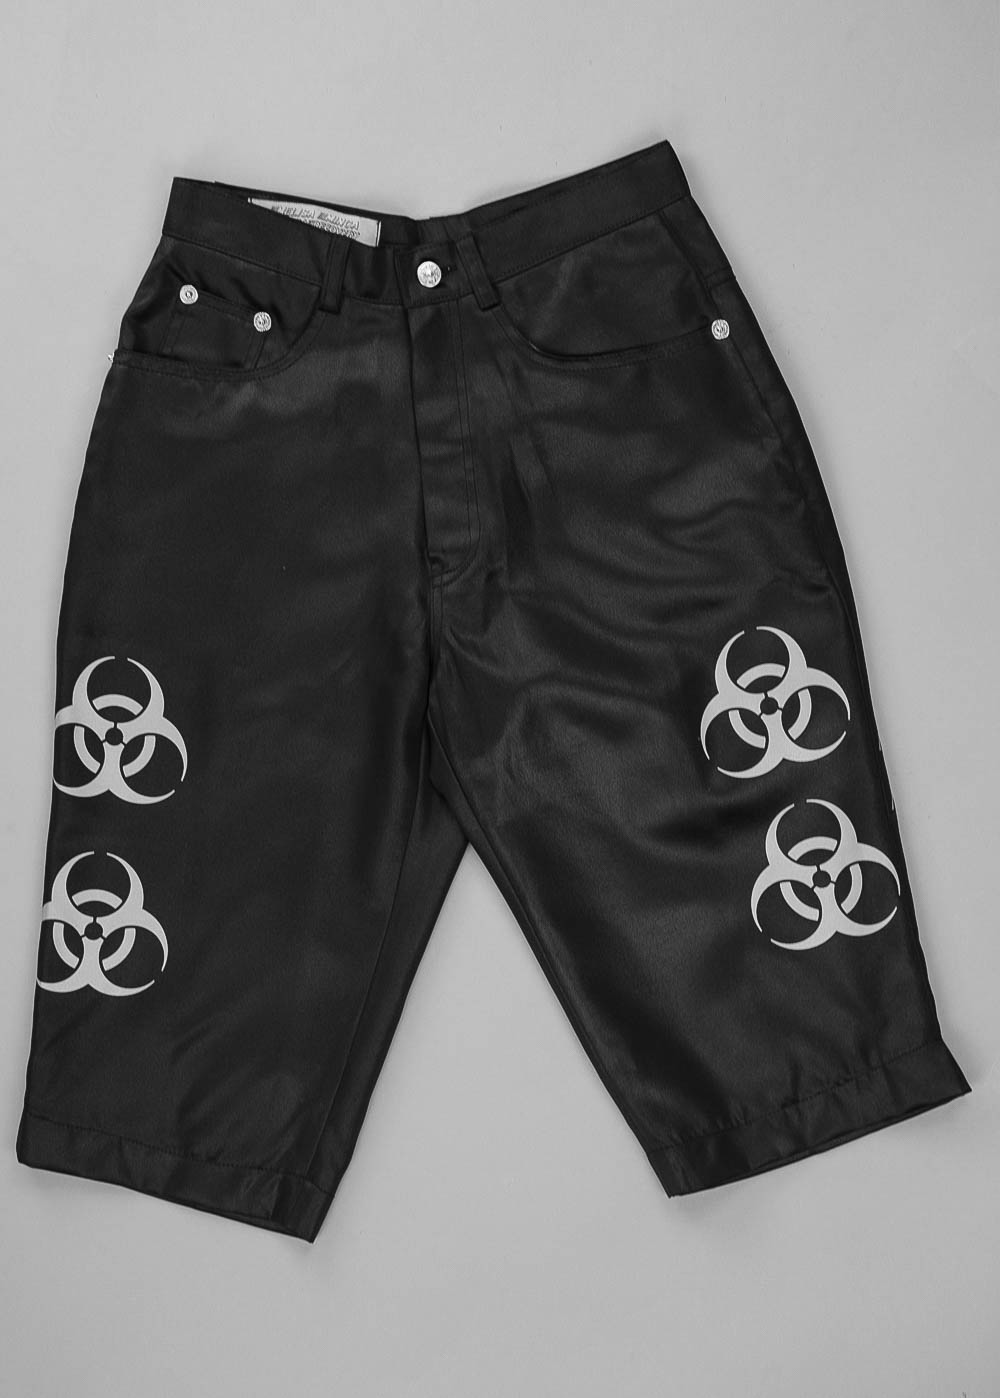 Toxic Shorts 43